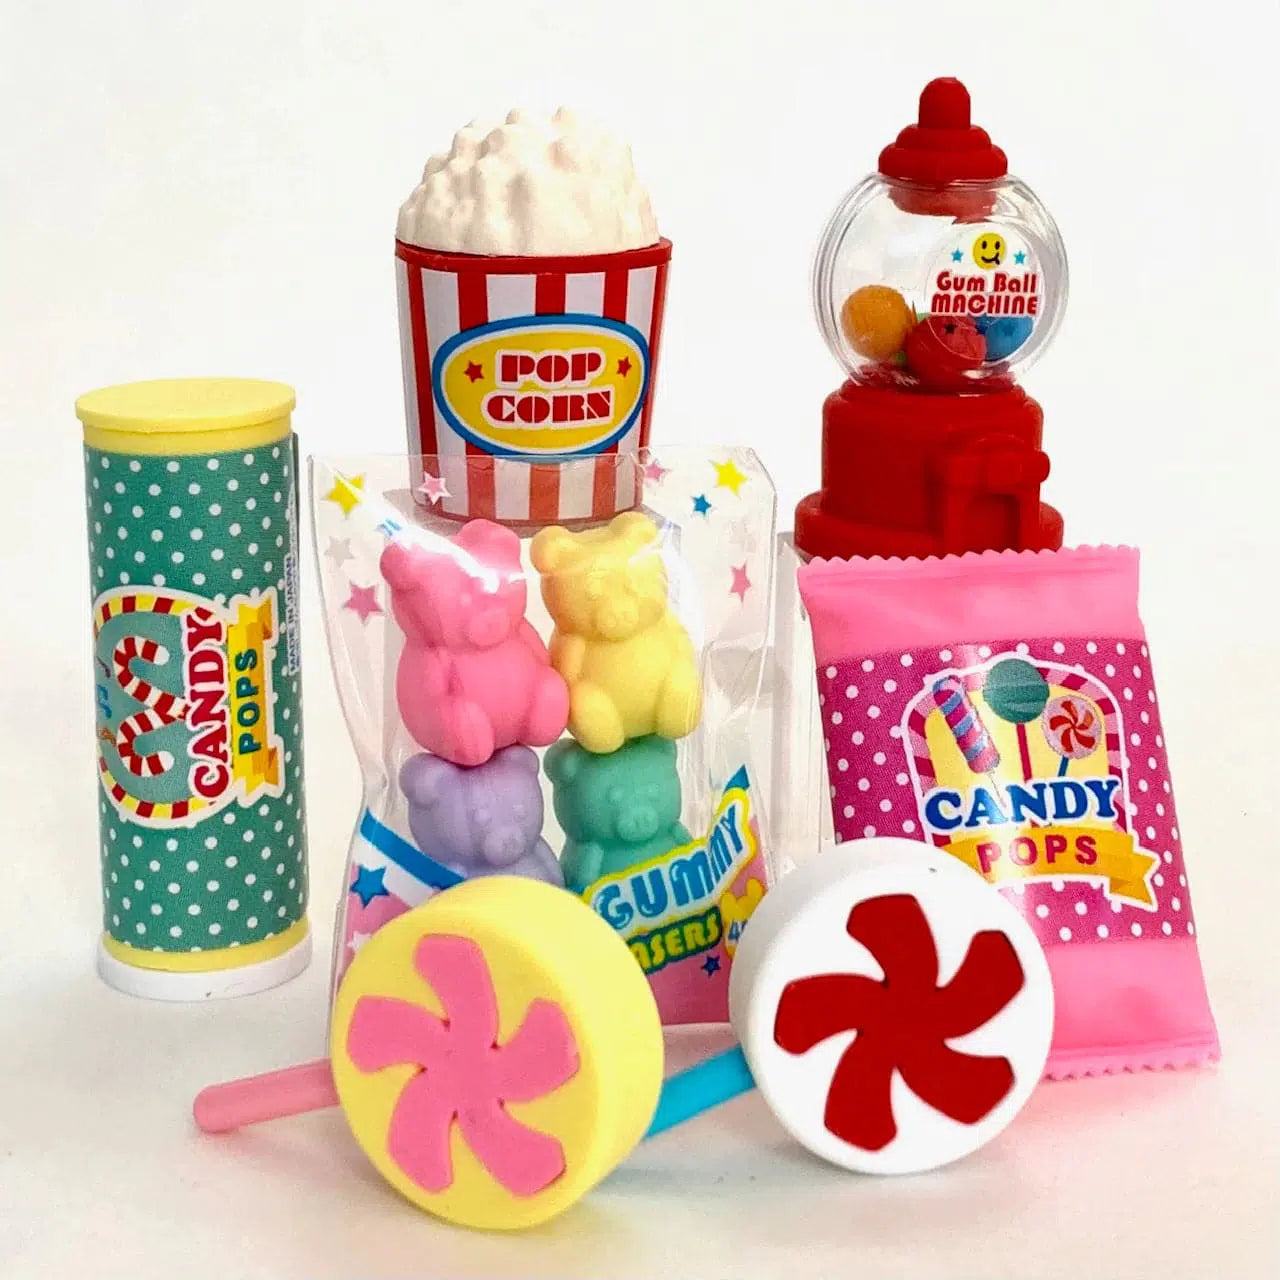 BC Mini-Iwako Eraser Pop Sweets 10 Pack-38297-Legacy Toys